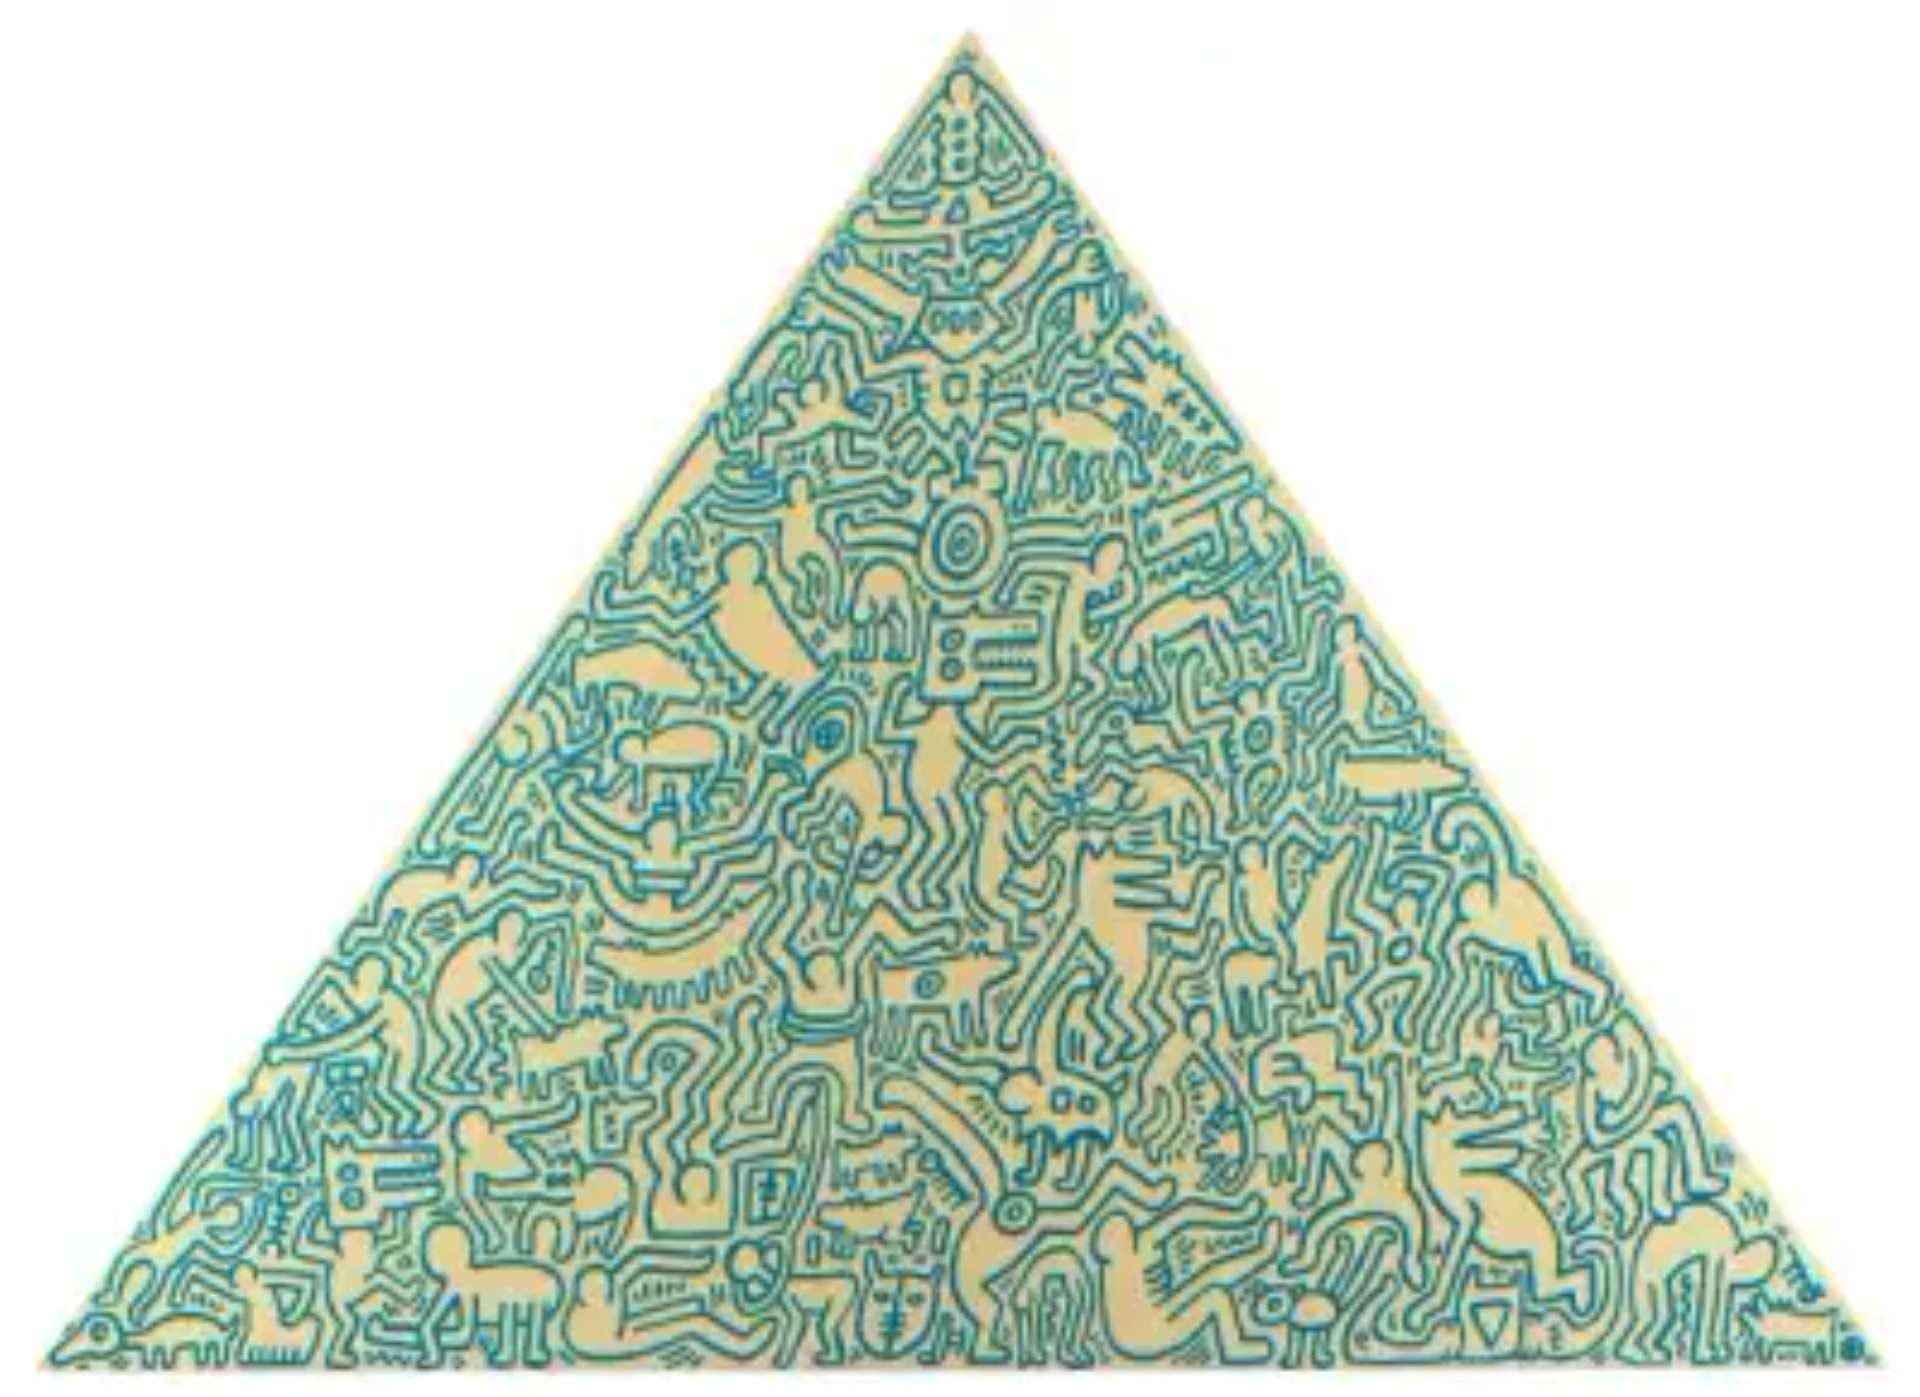 Pyramid (gold II) by Keith Haring